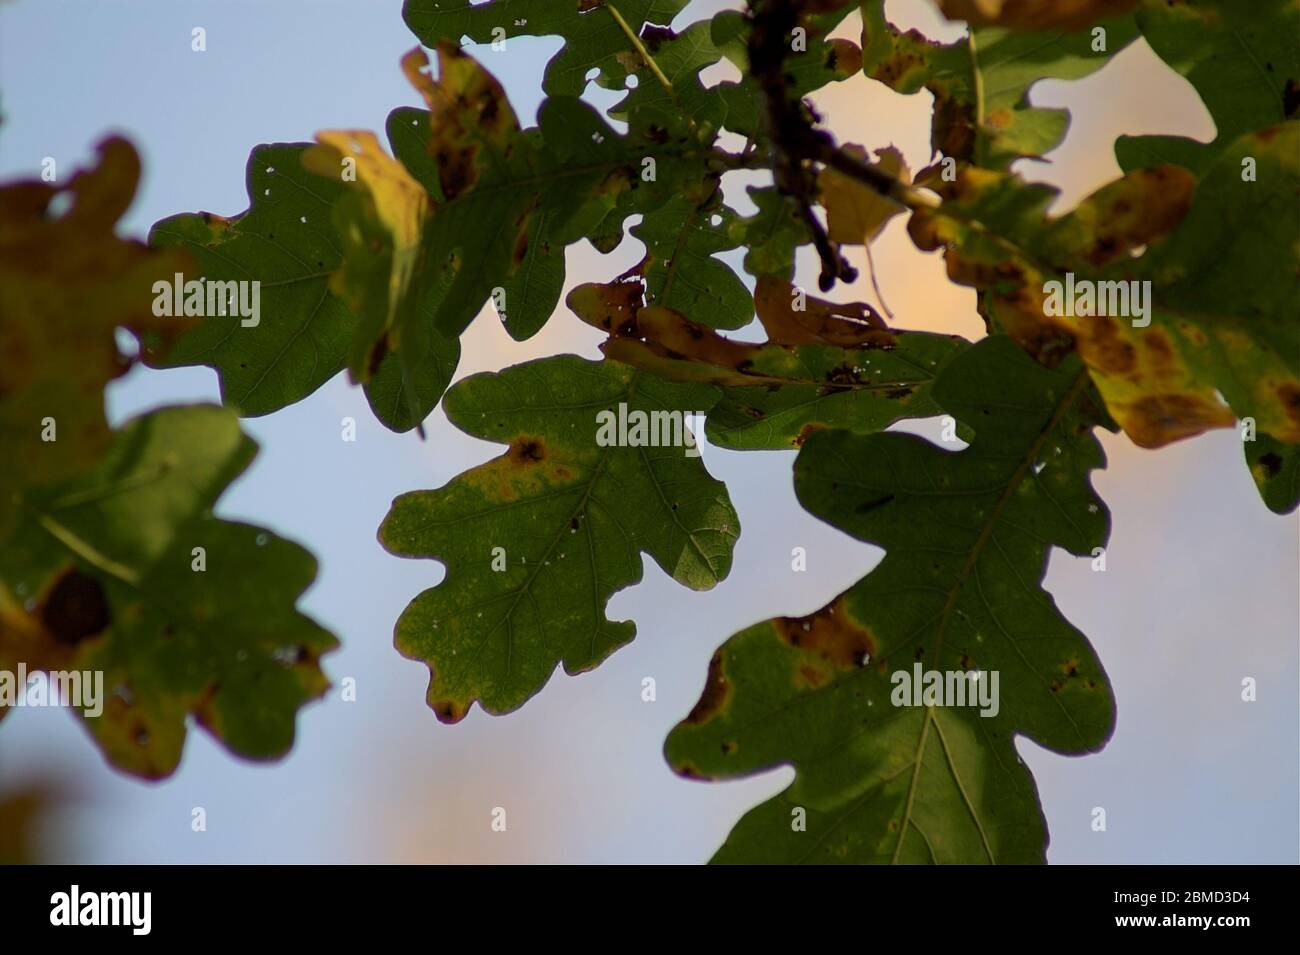 Yellowed oak leaves close up. Vergilbte Eichenblätter hautnah. Pożółkłe dębowe liście z bliska. 橡樹葉 Stock Photo